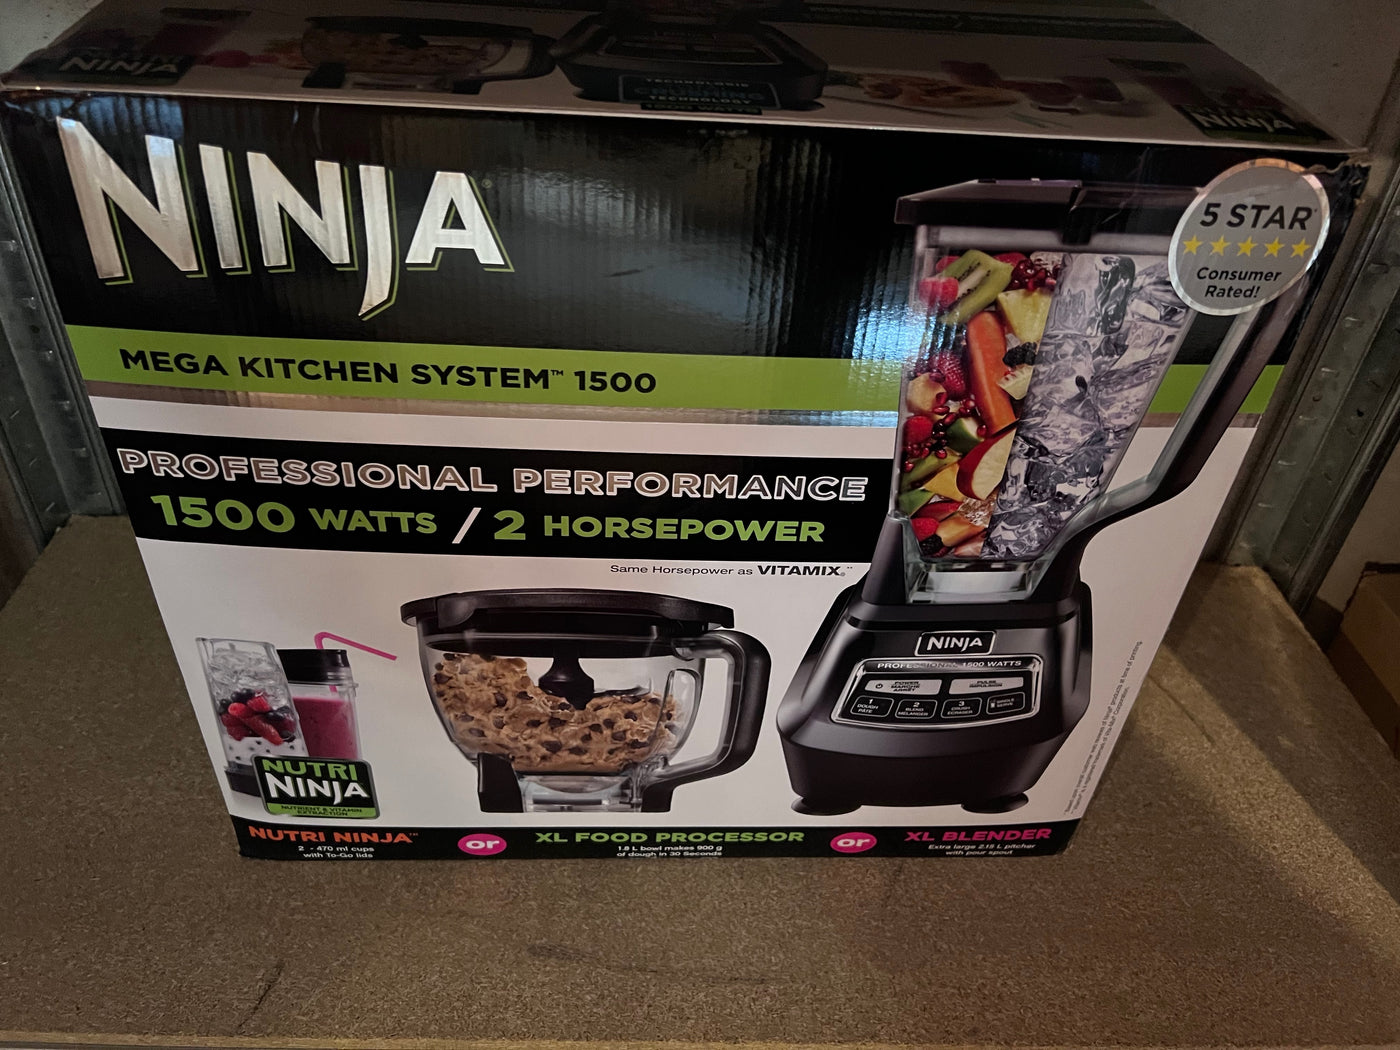 Like New Ninja Mega Kitchen System